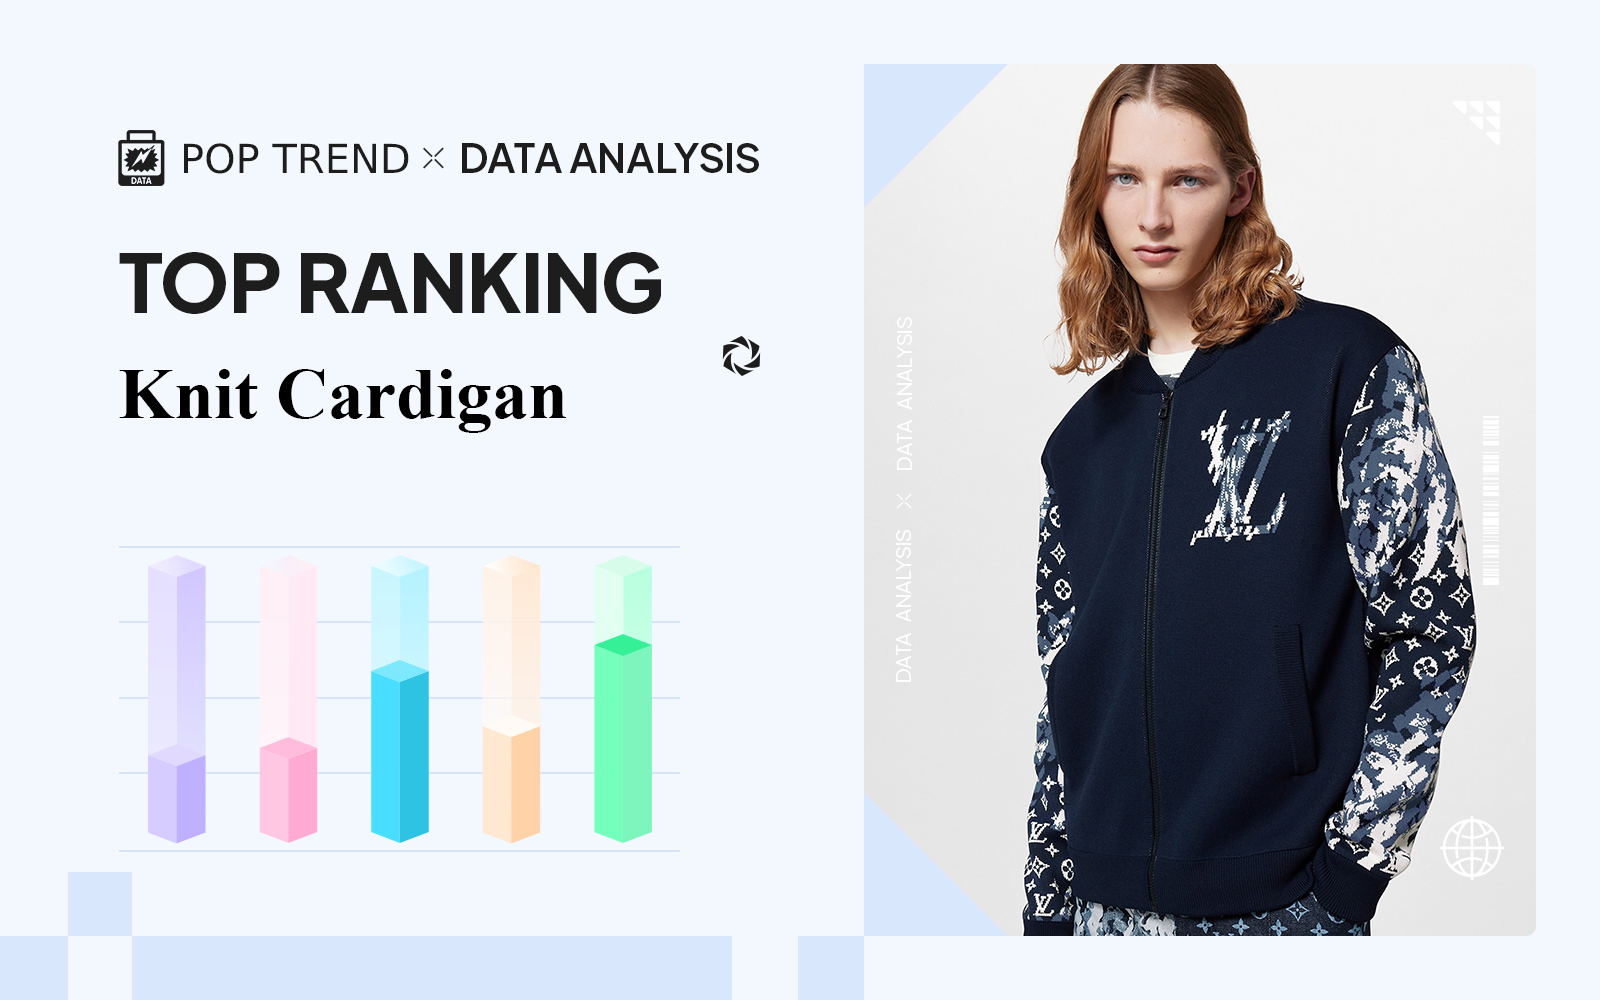 Cardigan -- The TOP Ranking of Men's Knitwear in September